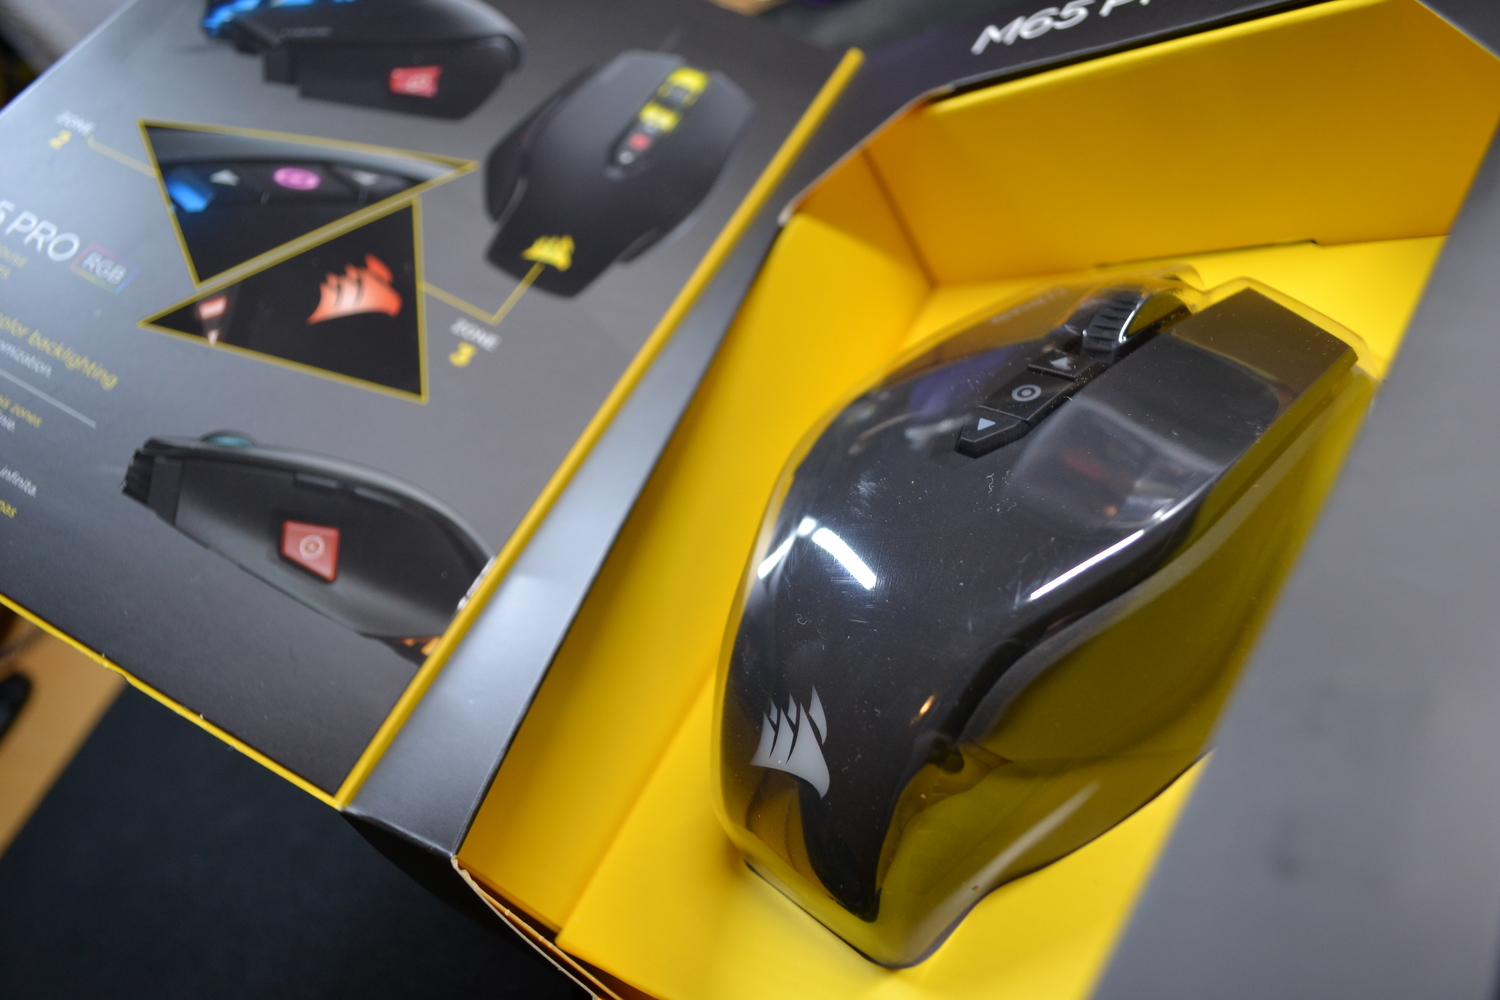 M65 PRO RGB FPS Gaming Mouse — Black